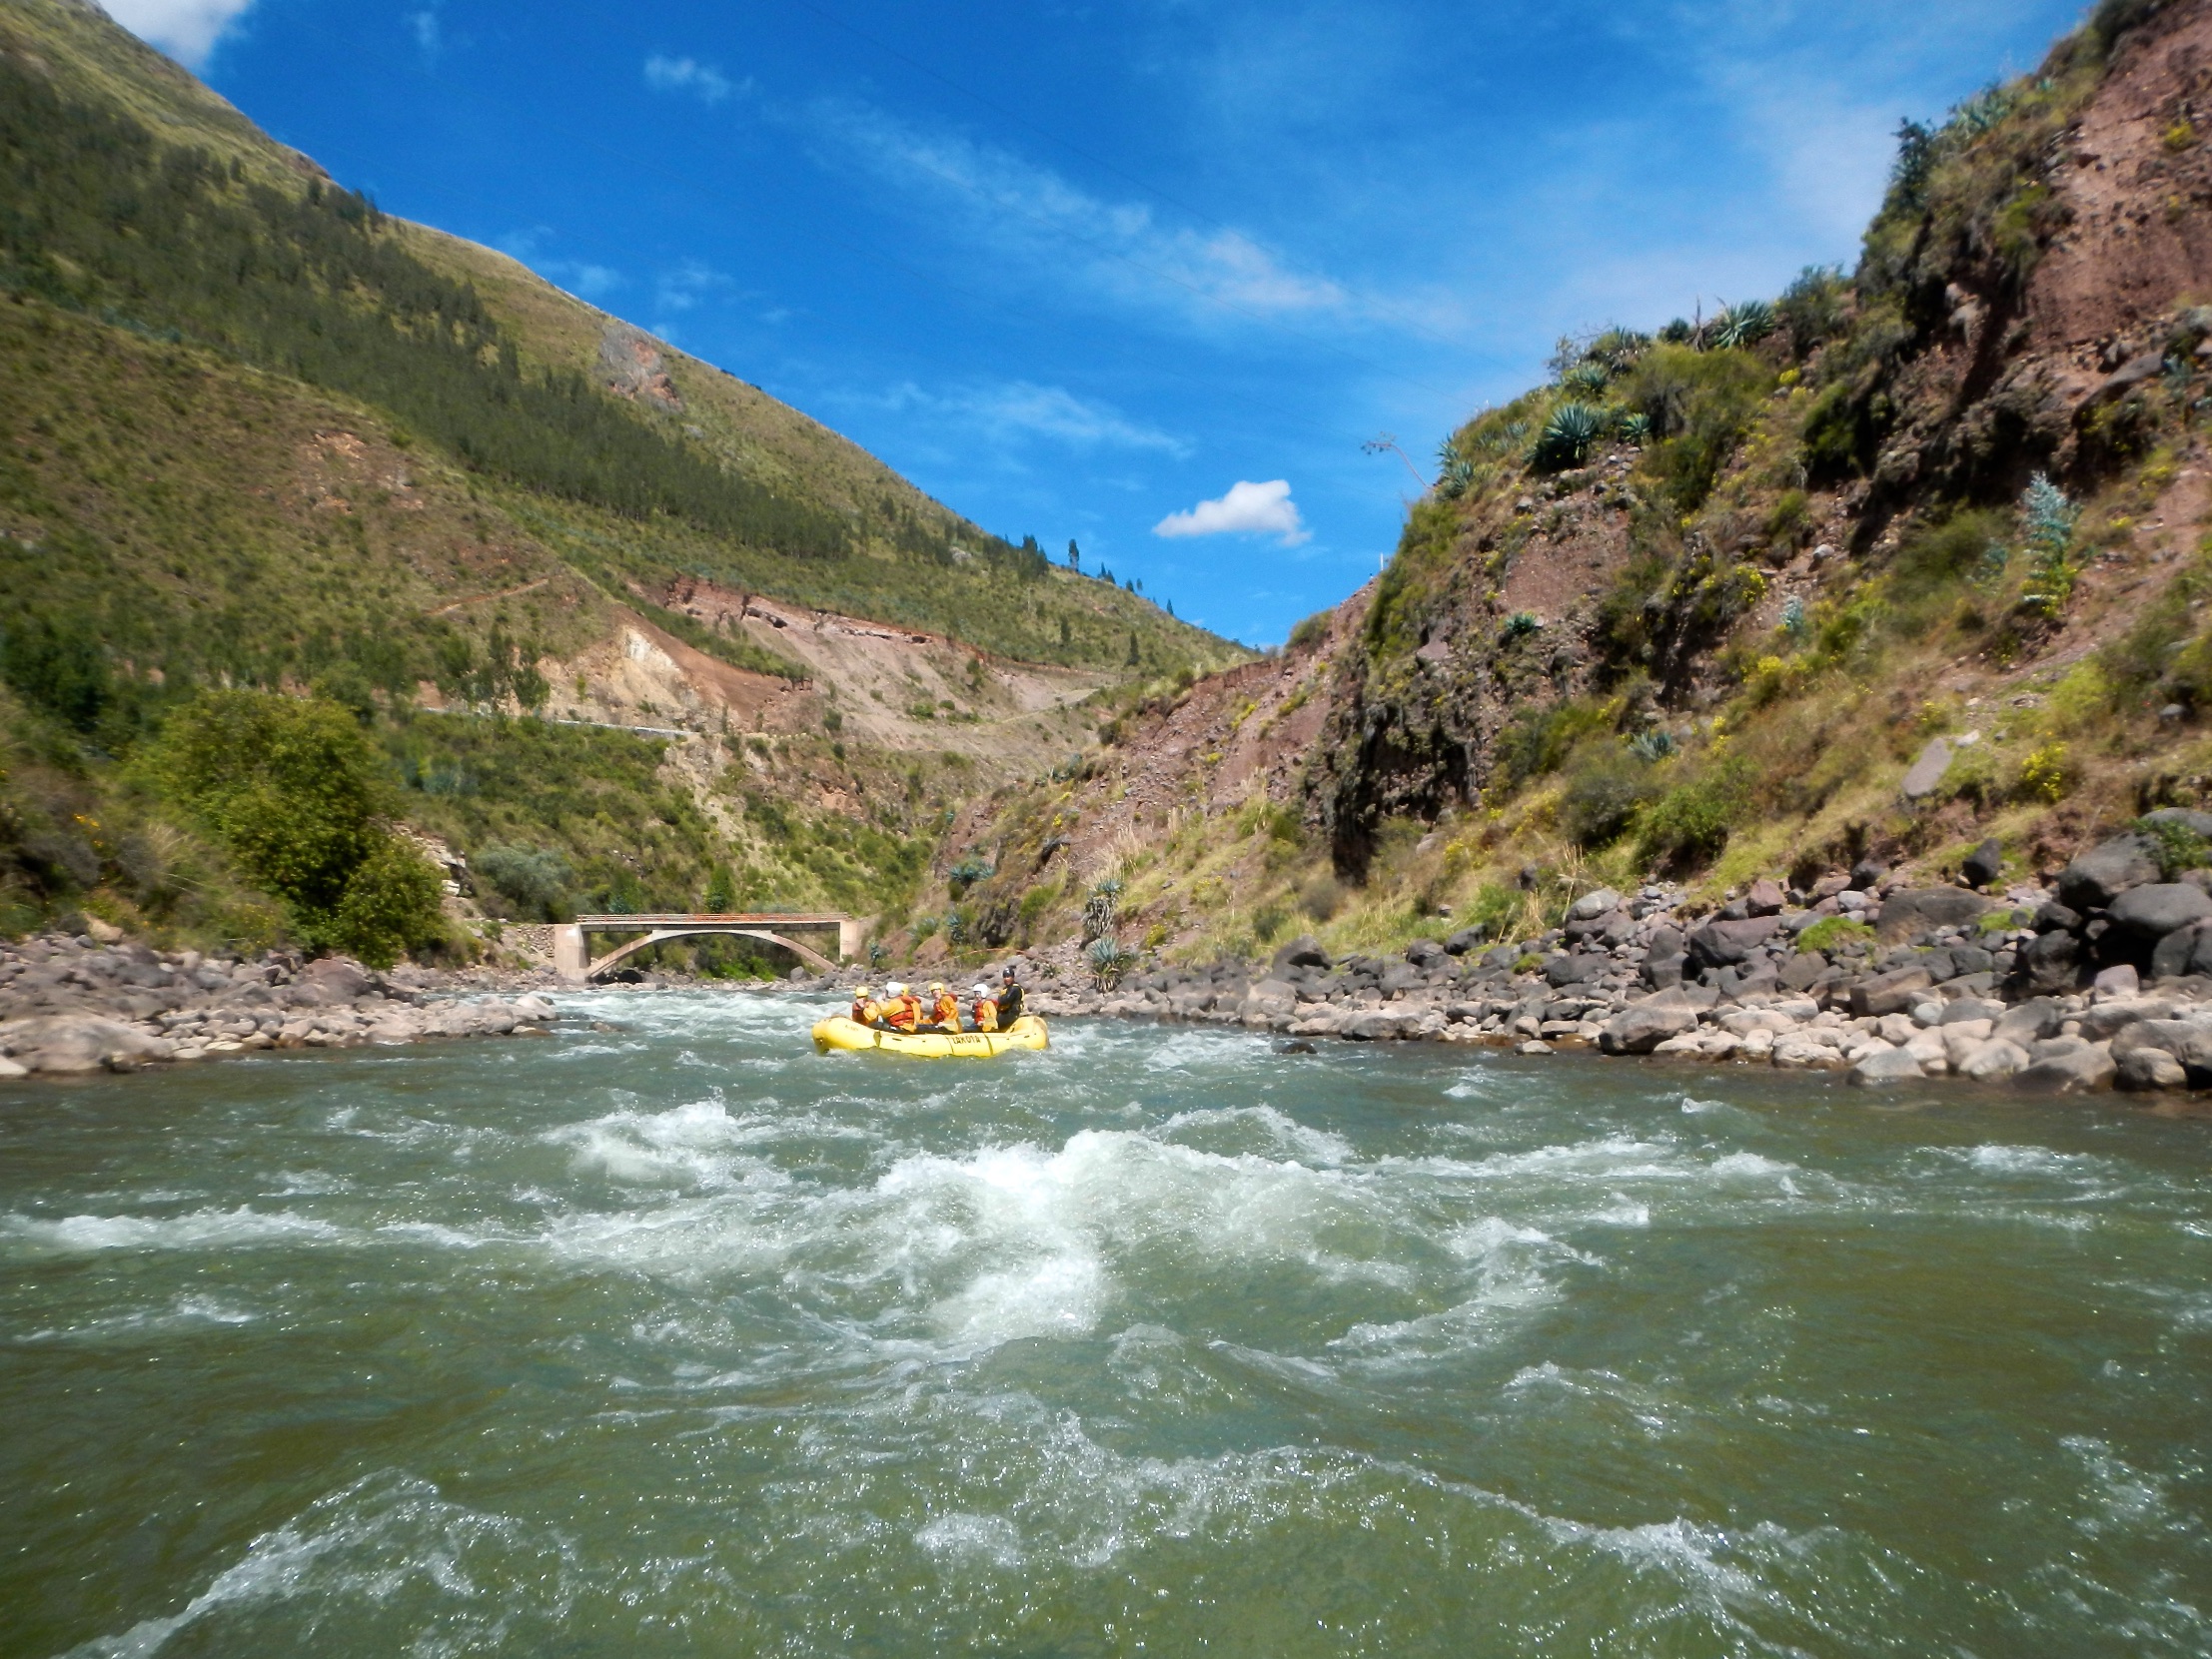  Rafting on Vilcanota River, near Cusco, Peru 